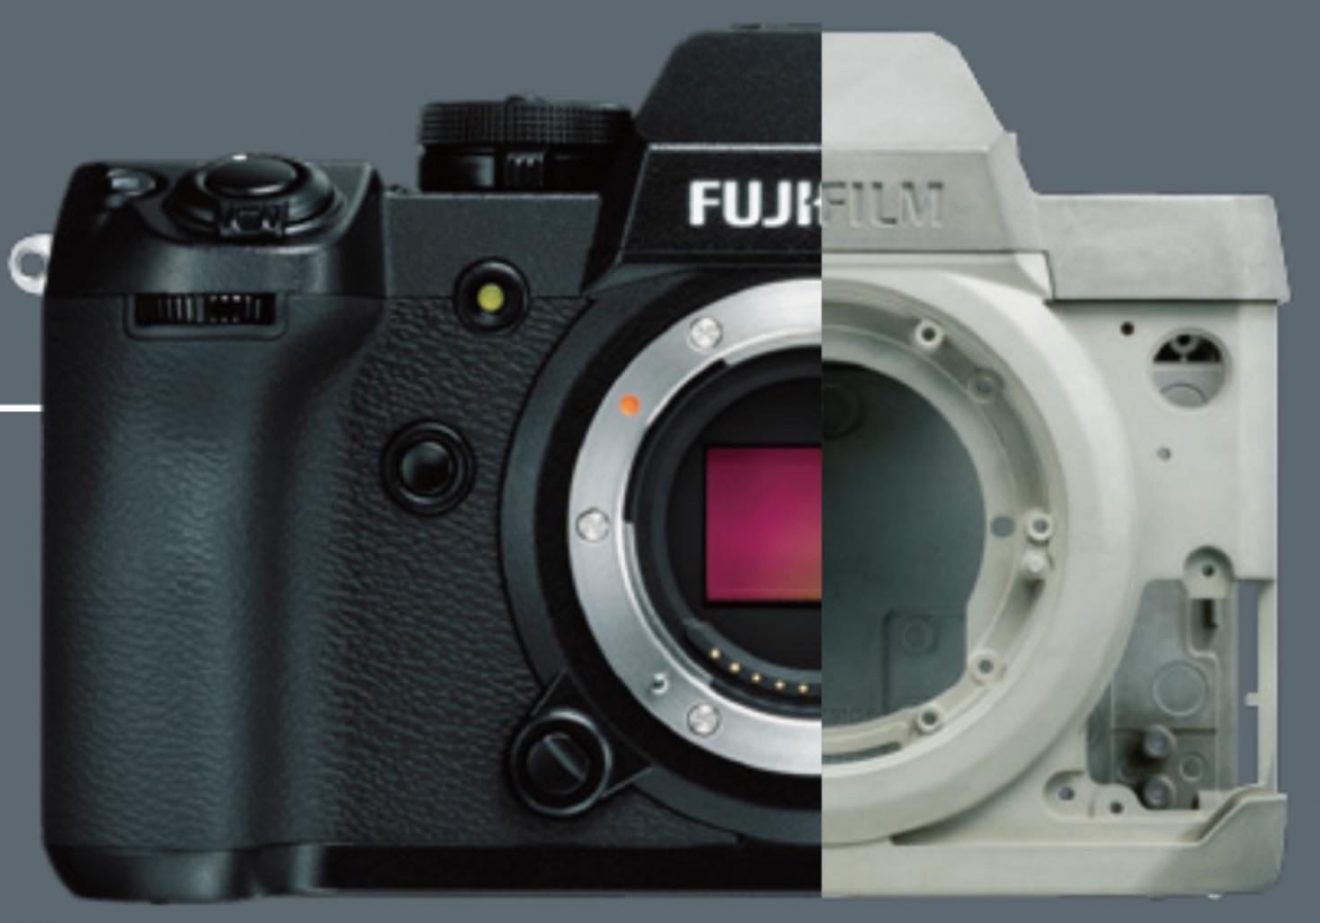 New Fujifilm FF190005 Camera Registered Two Fuji Cameras Coming Soon